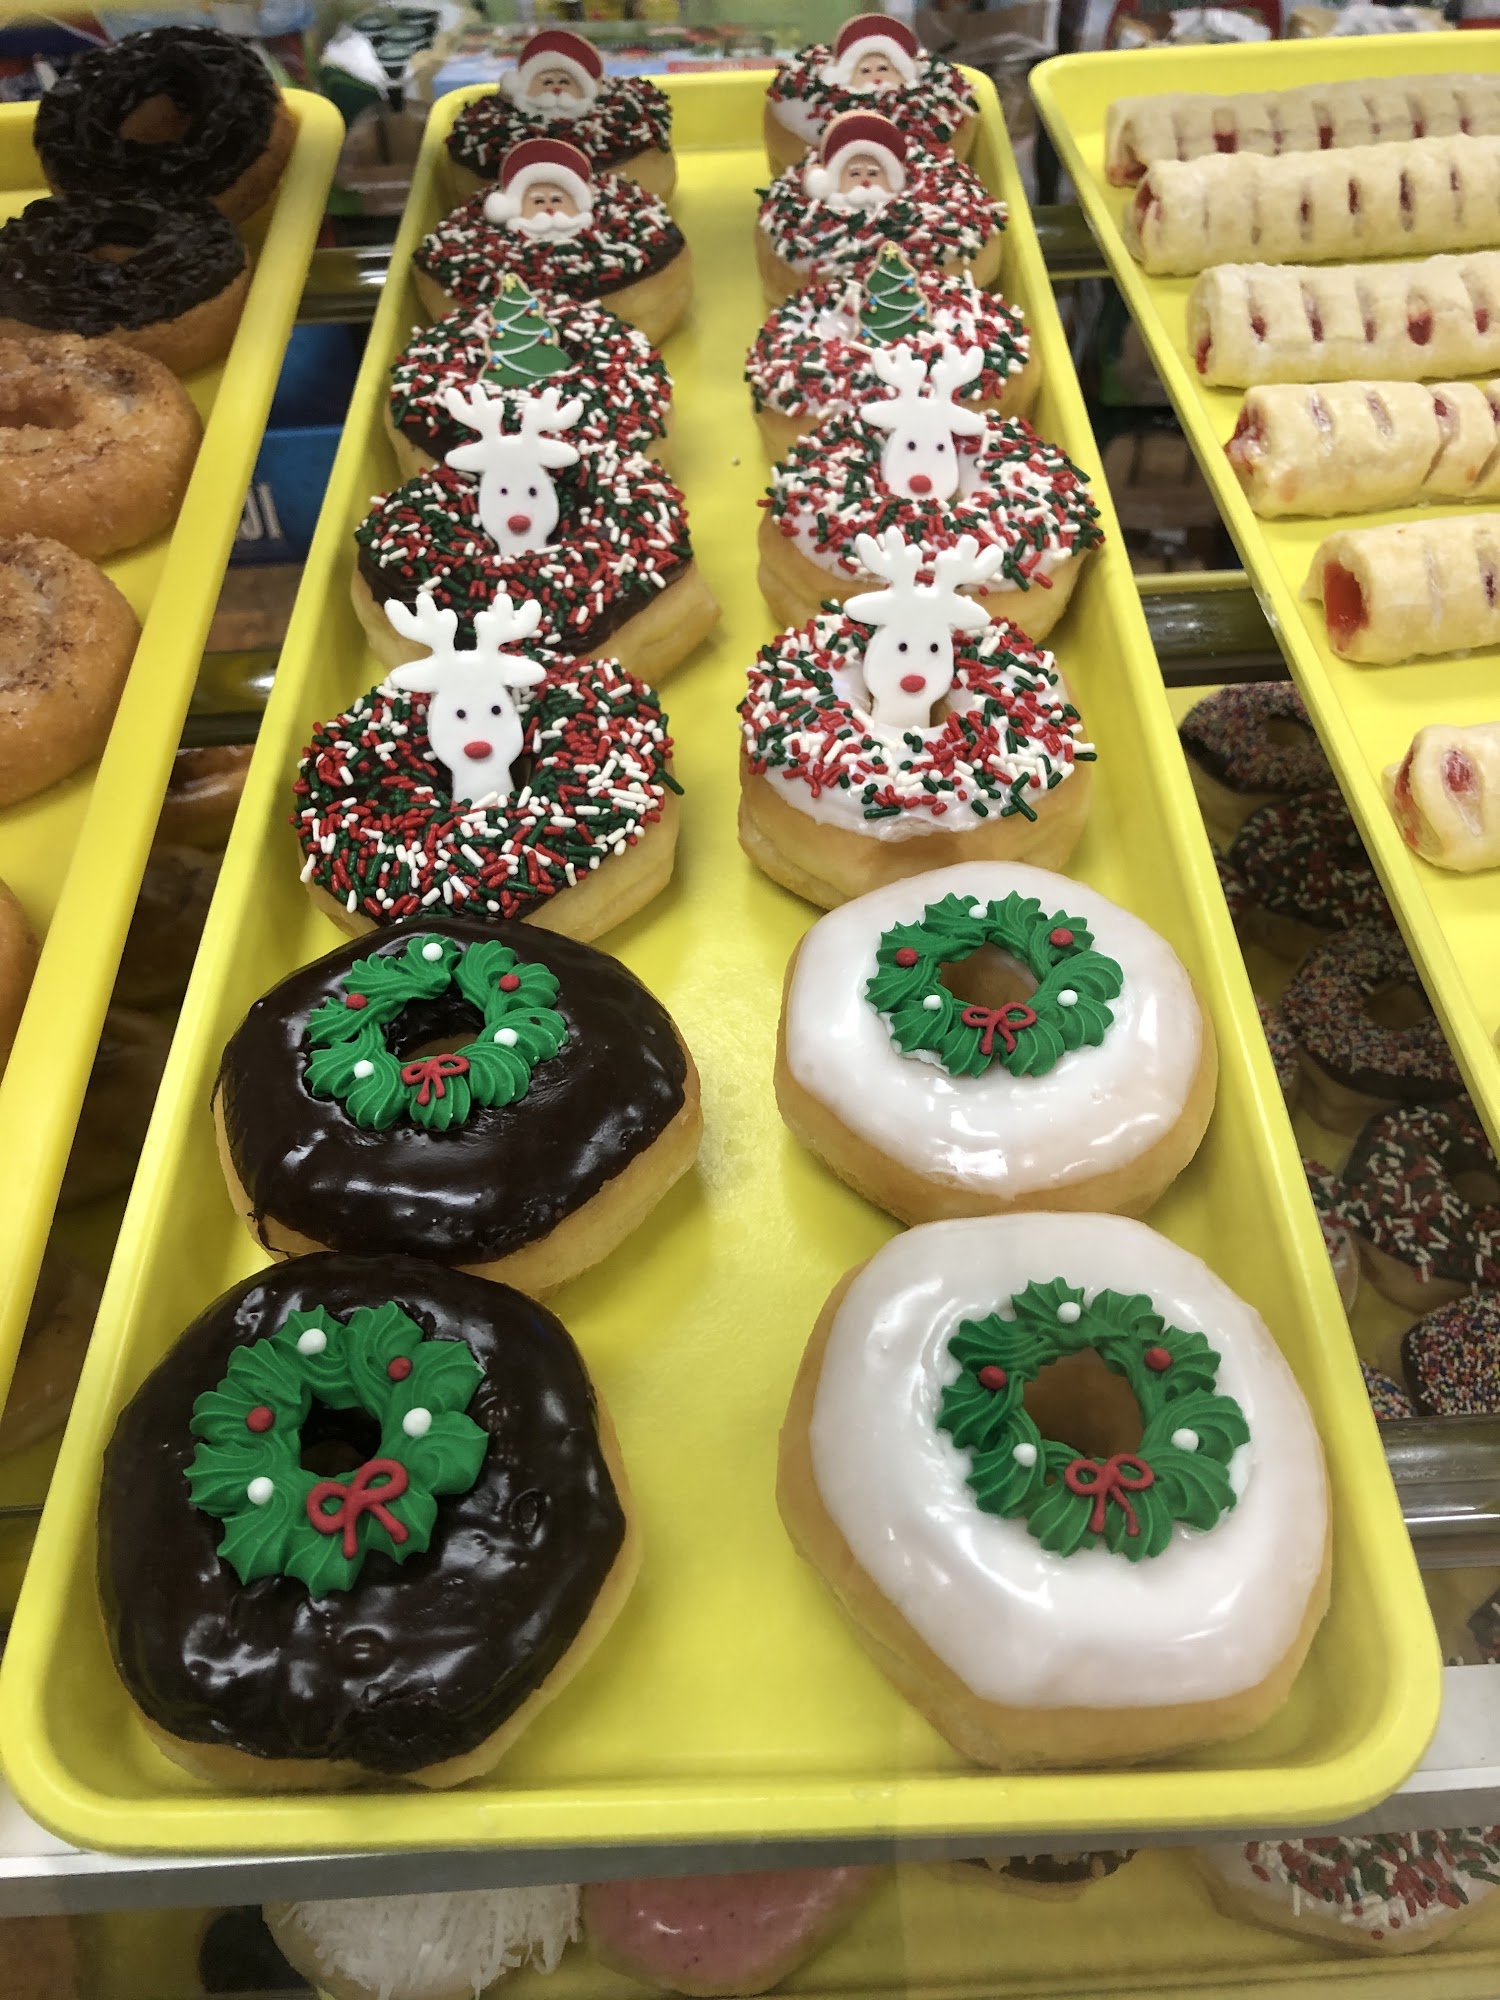 DV's Homemade Donuts